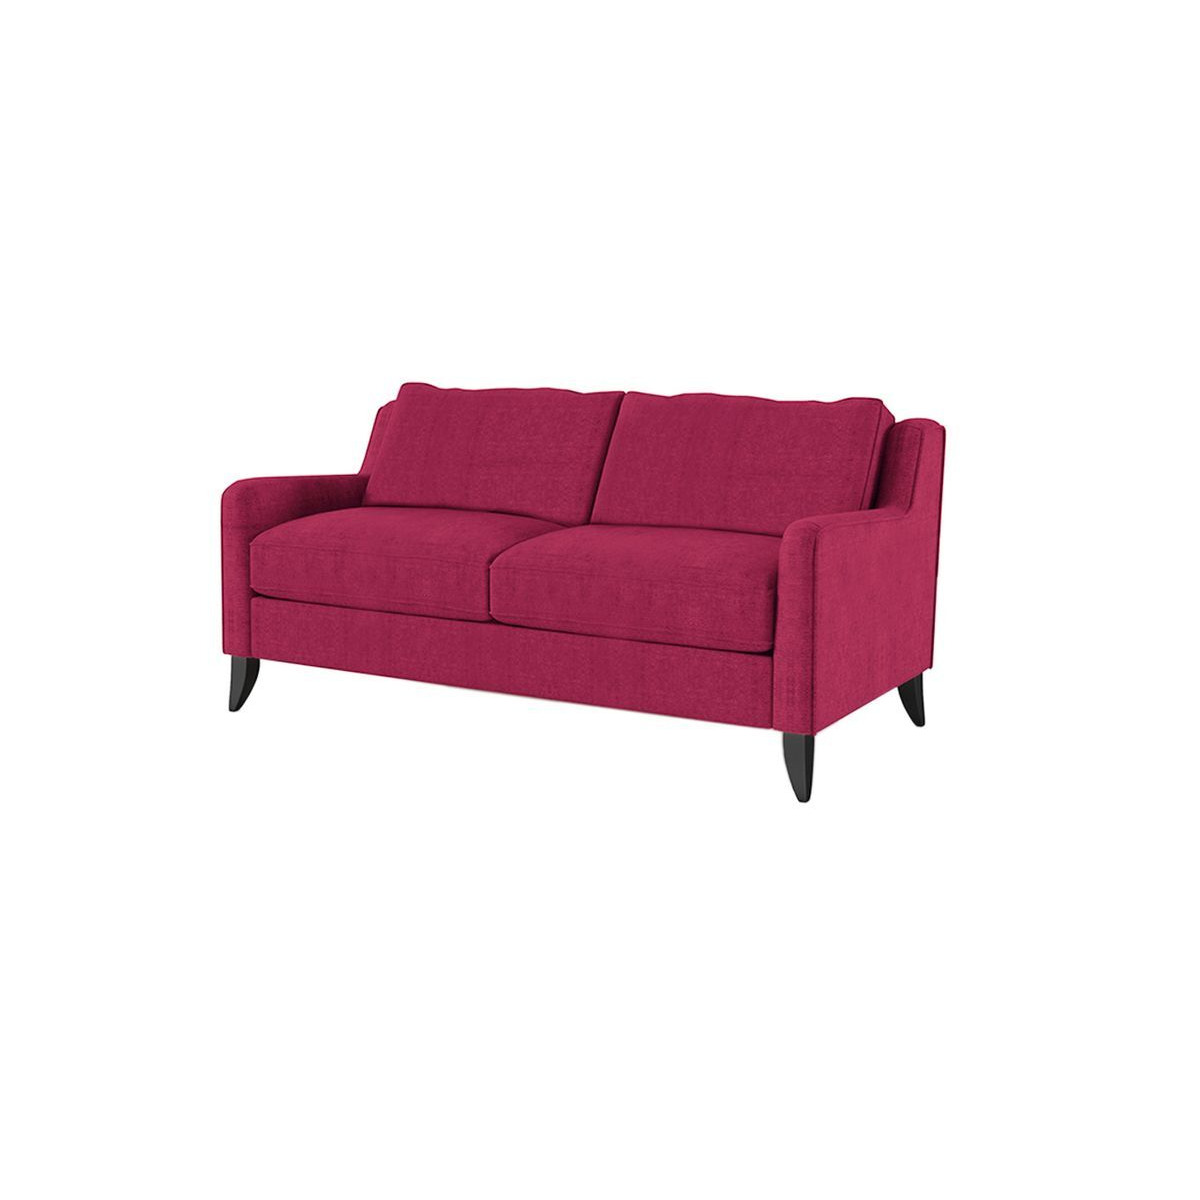 Orson 2 Seater Sofa, dark pink